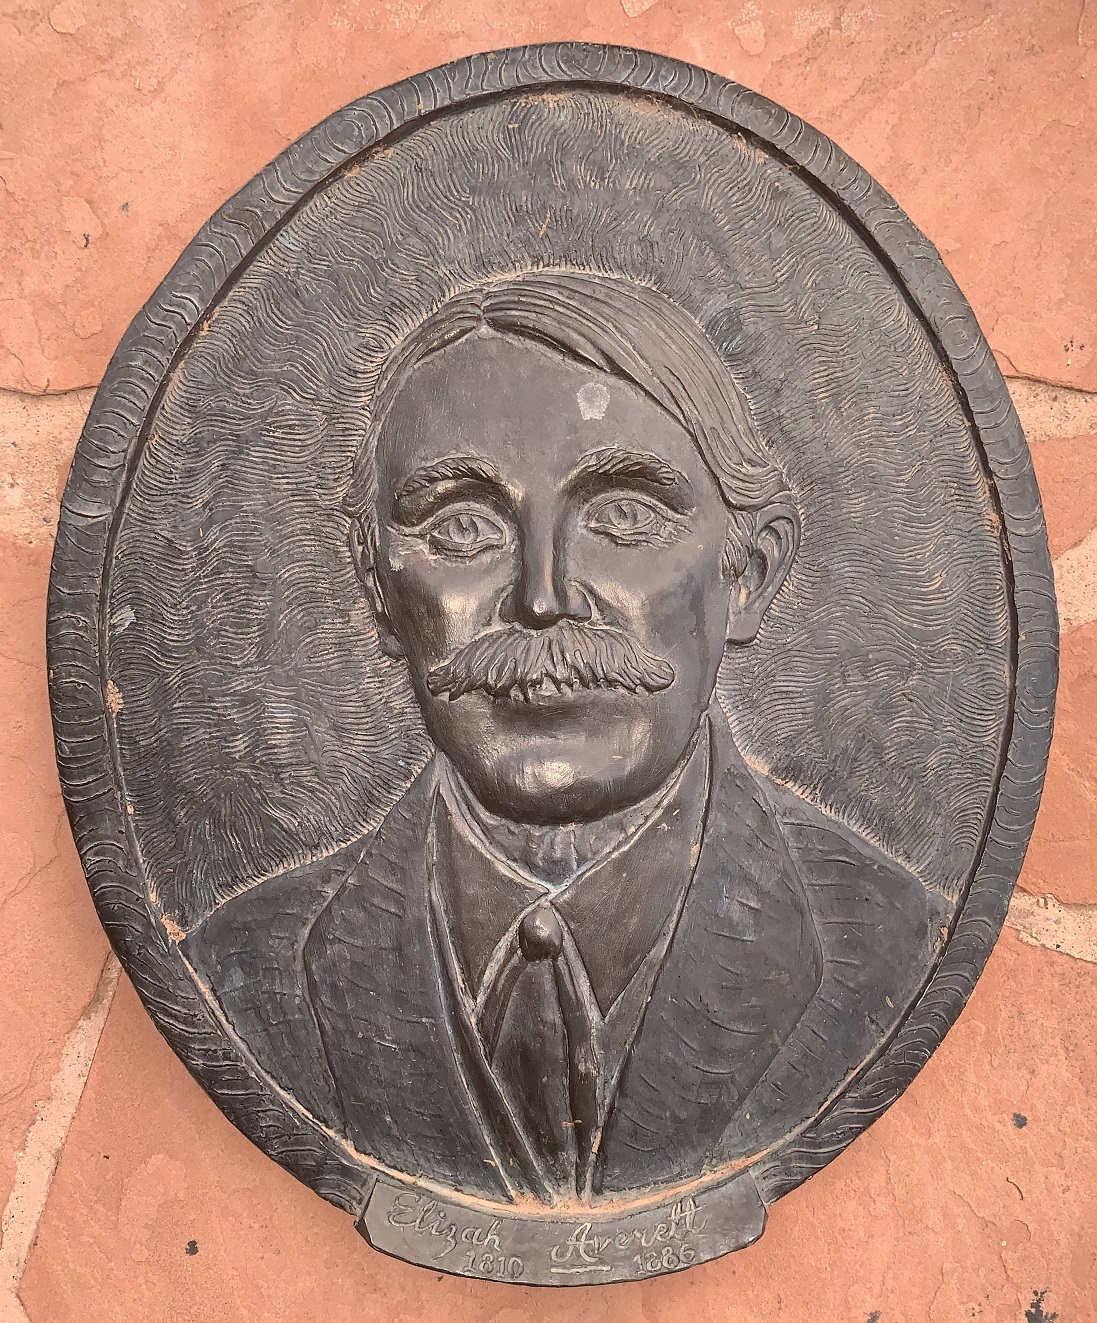 Face plaque of Eliza Averett at the Monument Plaza in Washington, Utah